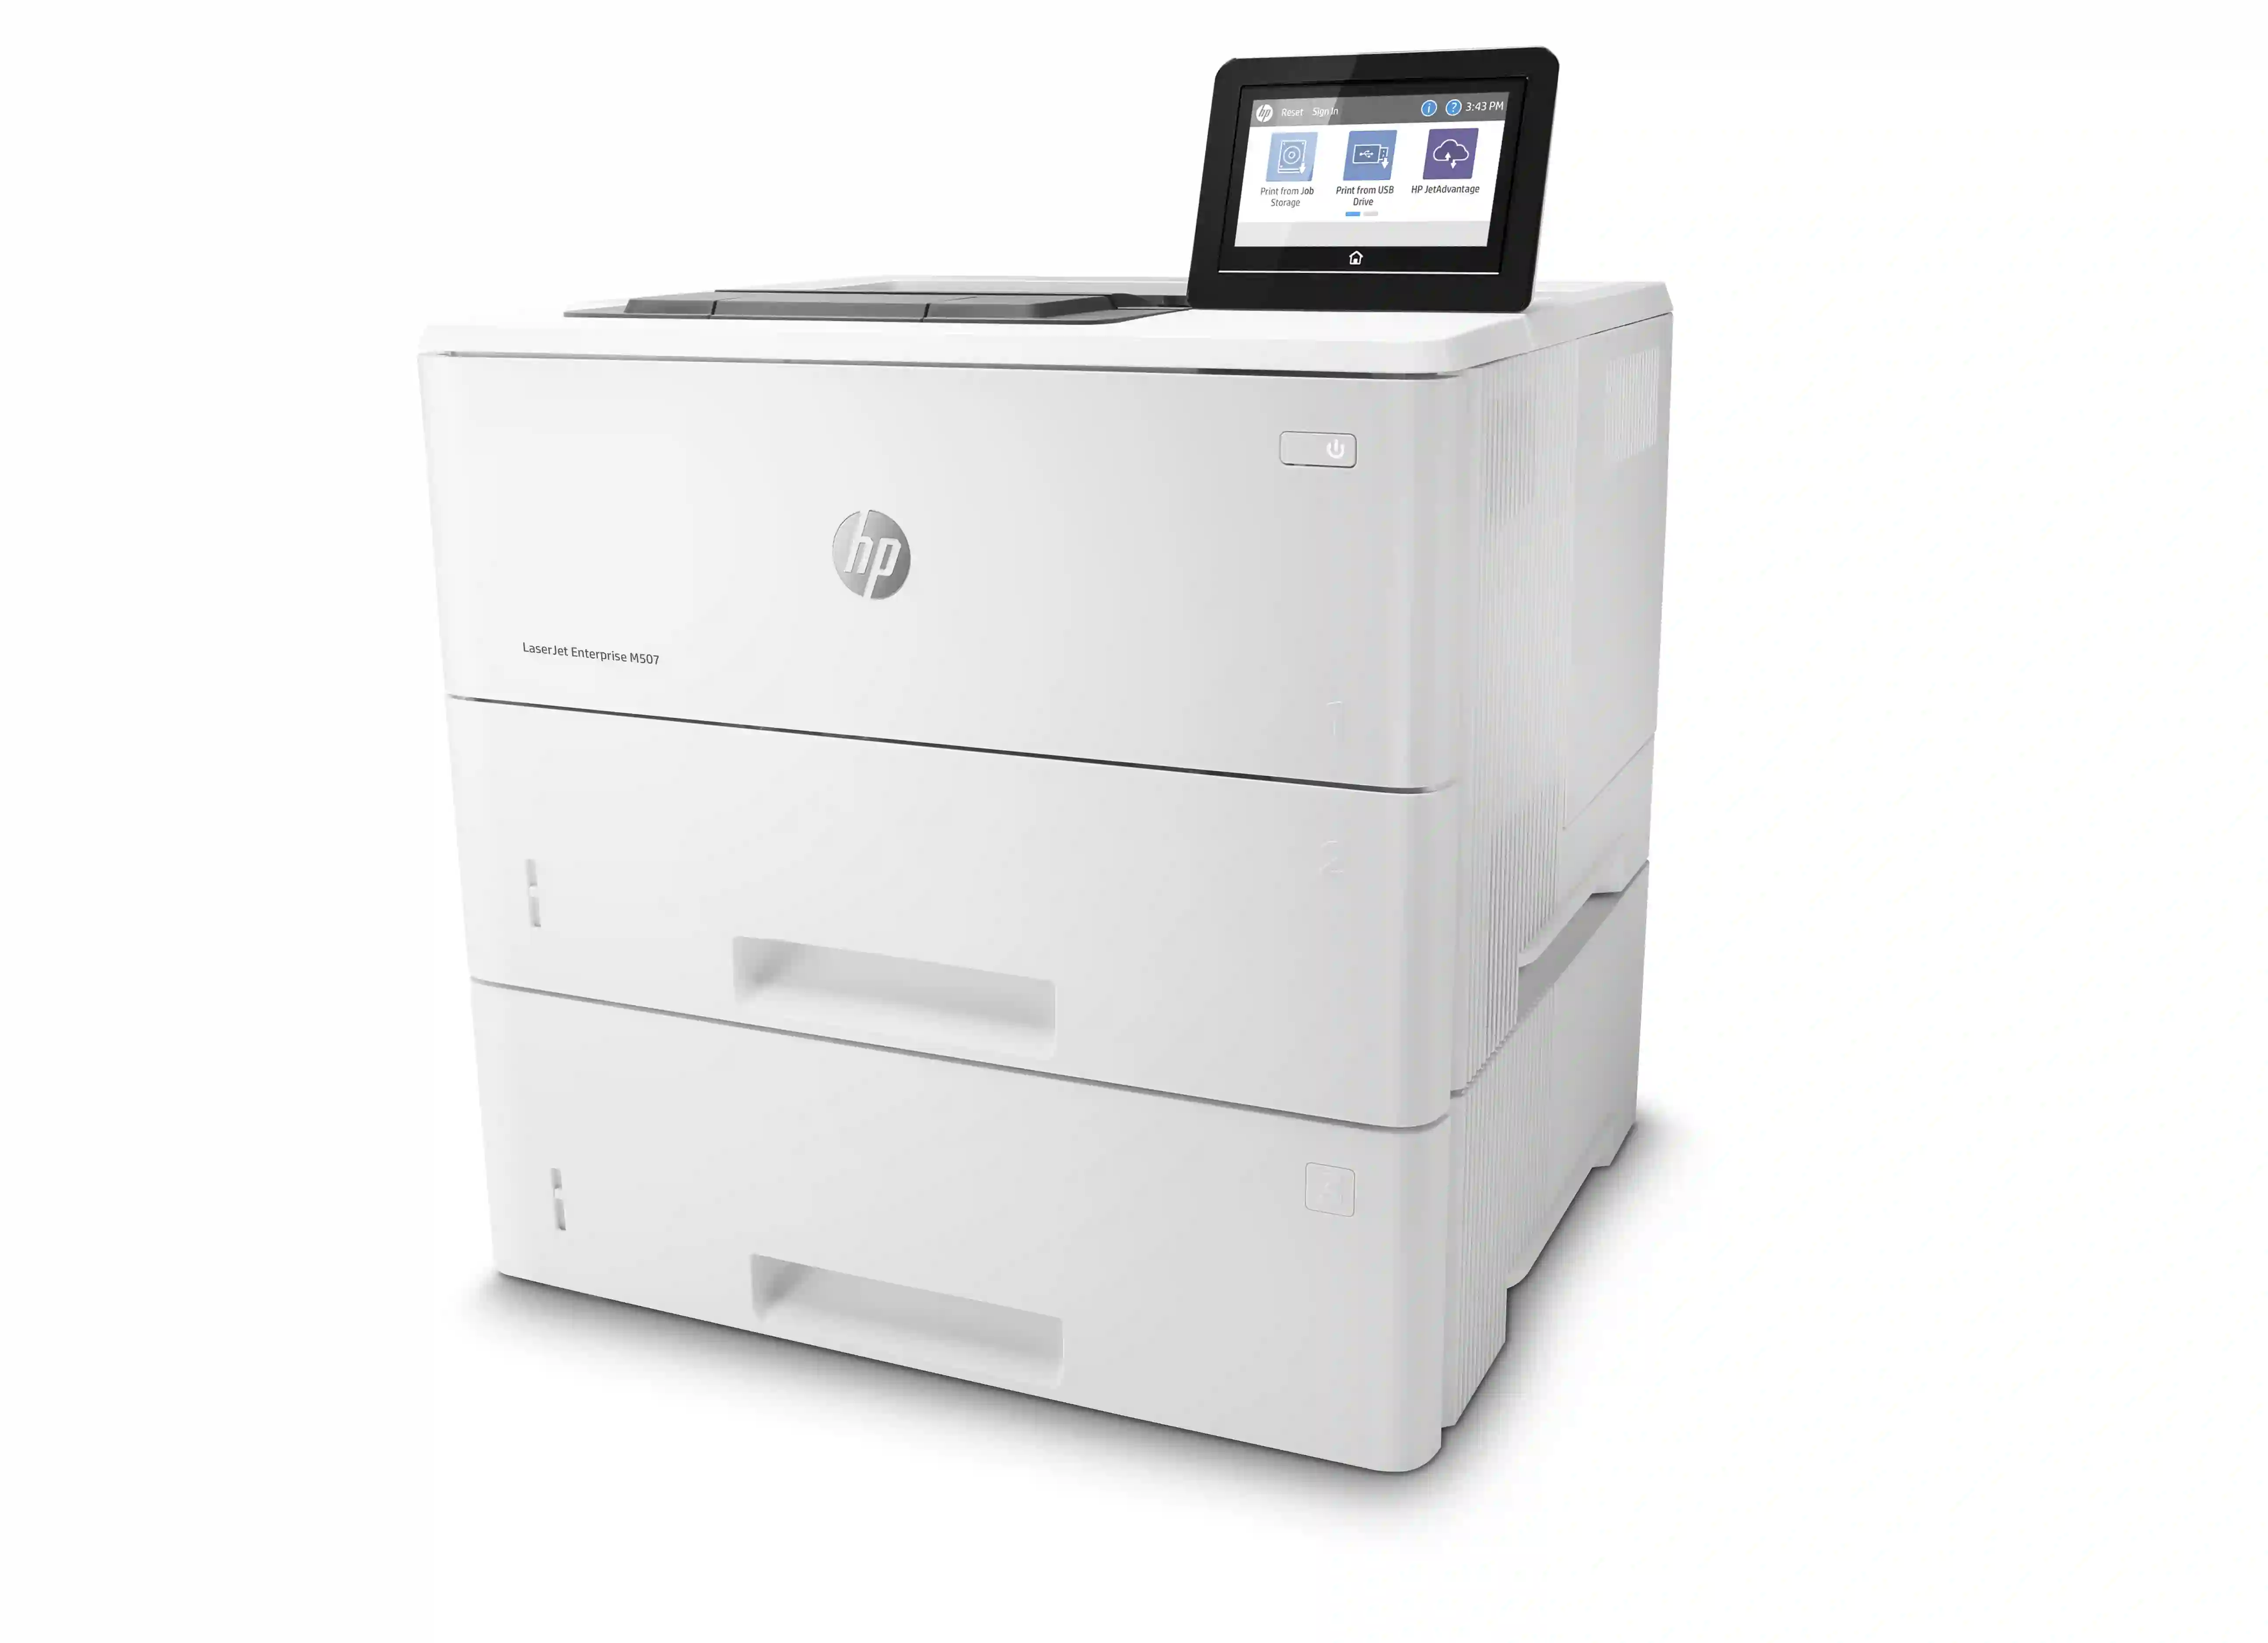 Принтер лазерный HP LaserJet Enterprise M507x (1PV88A)